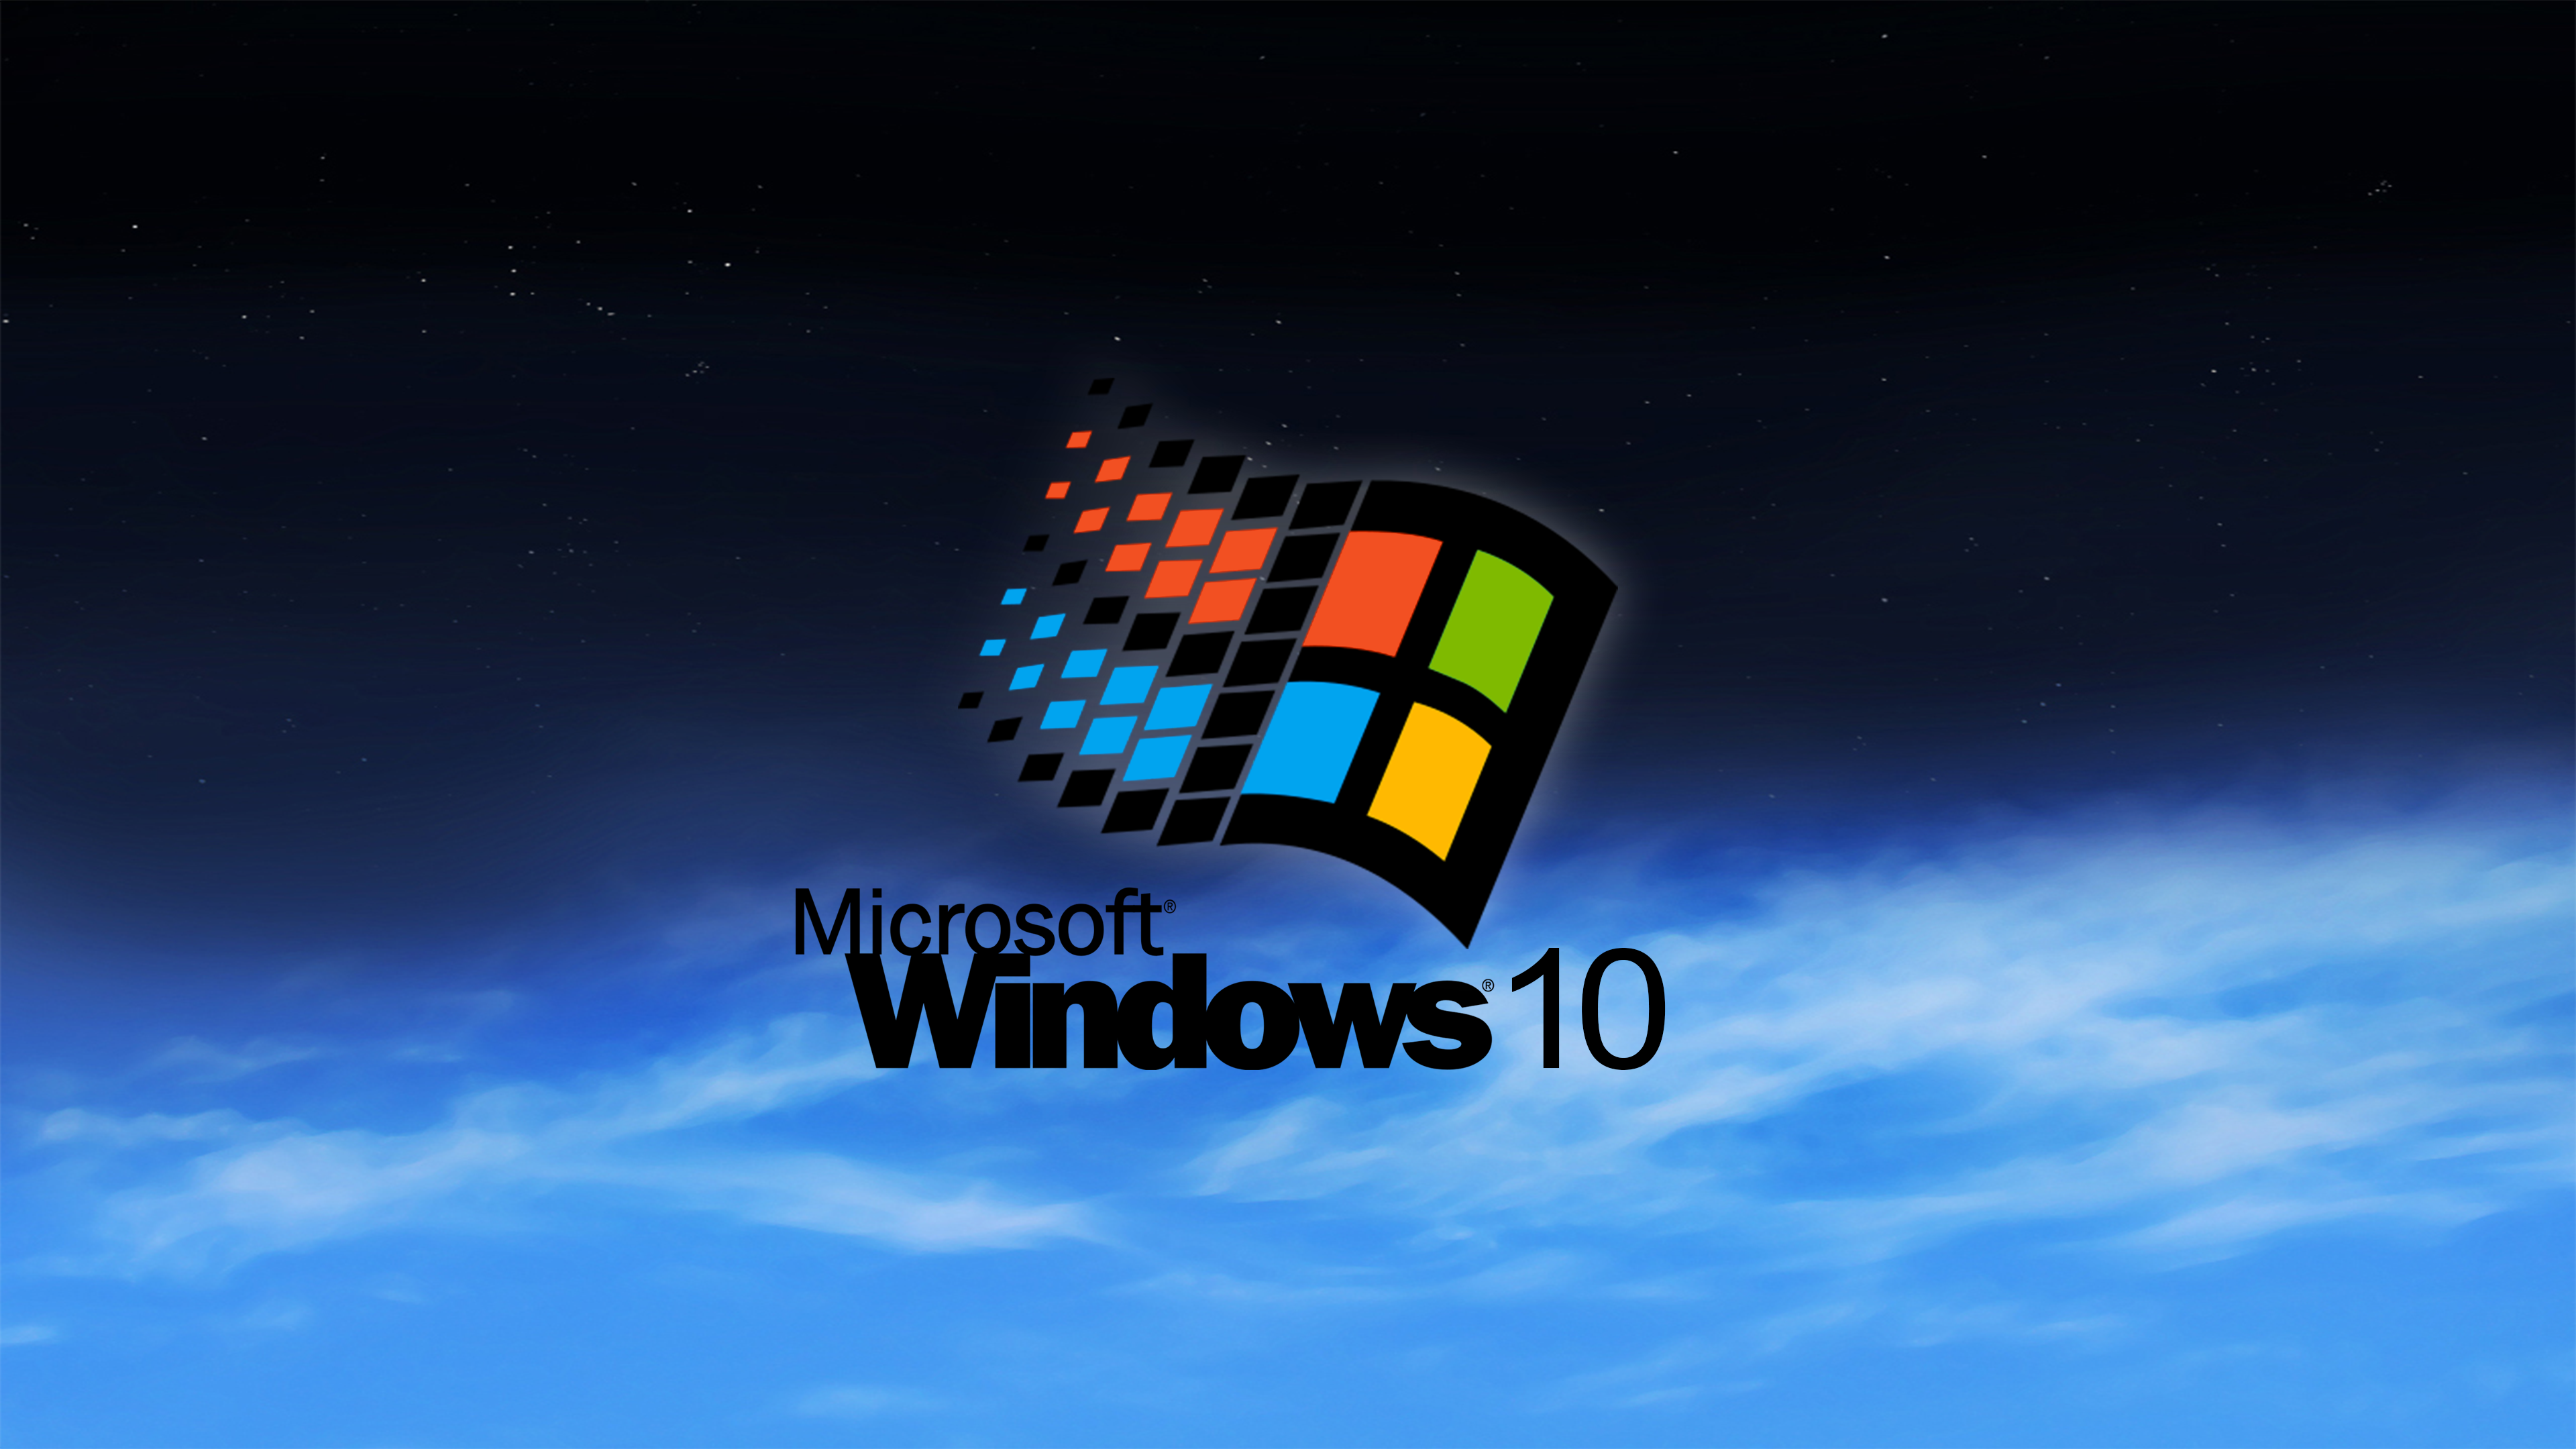 windows 95 wallpaper,operating system,logo,font,rubik's cube,sky